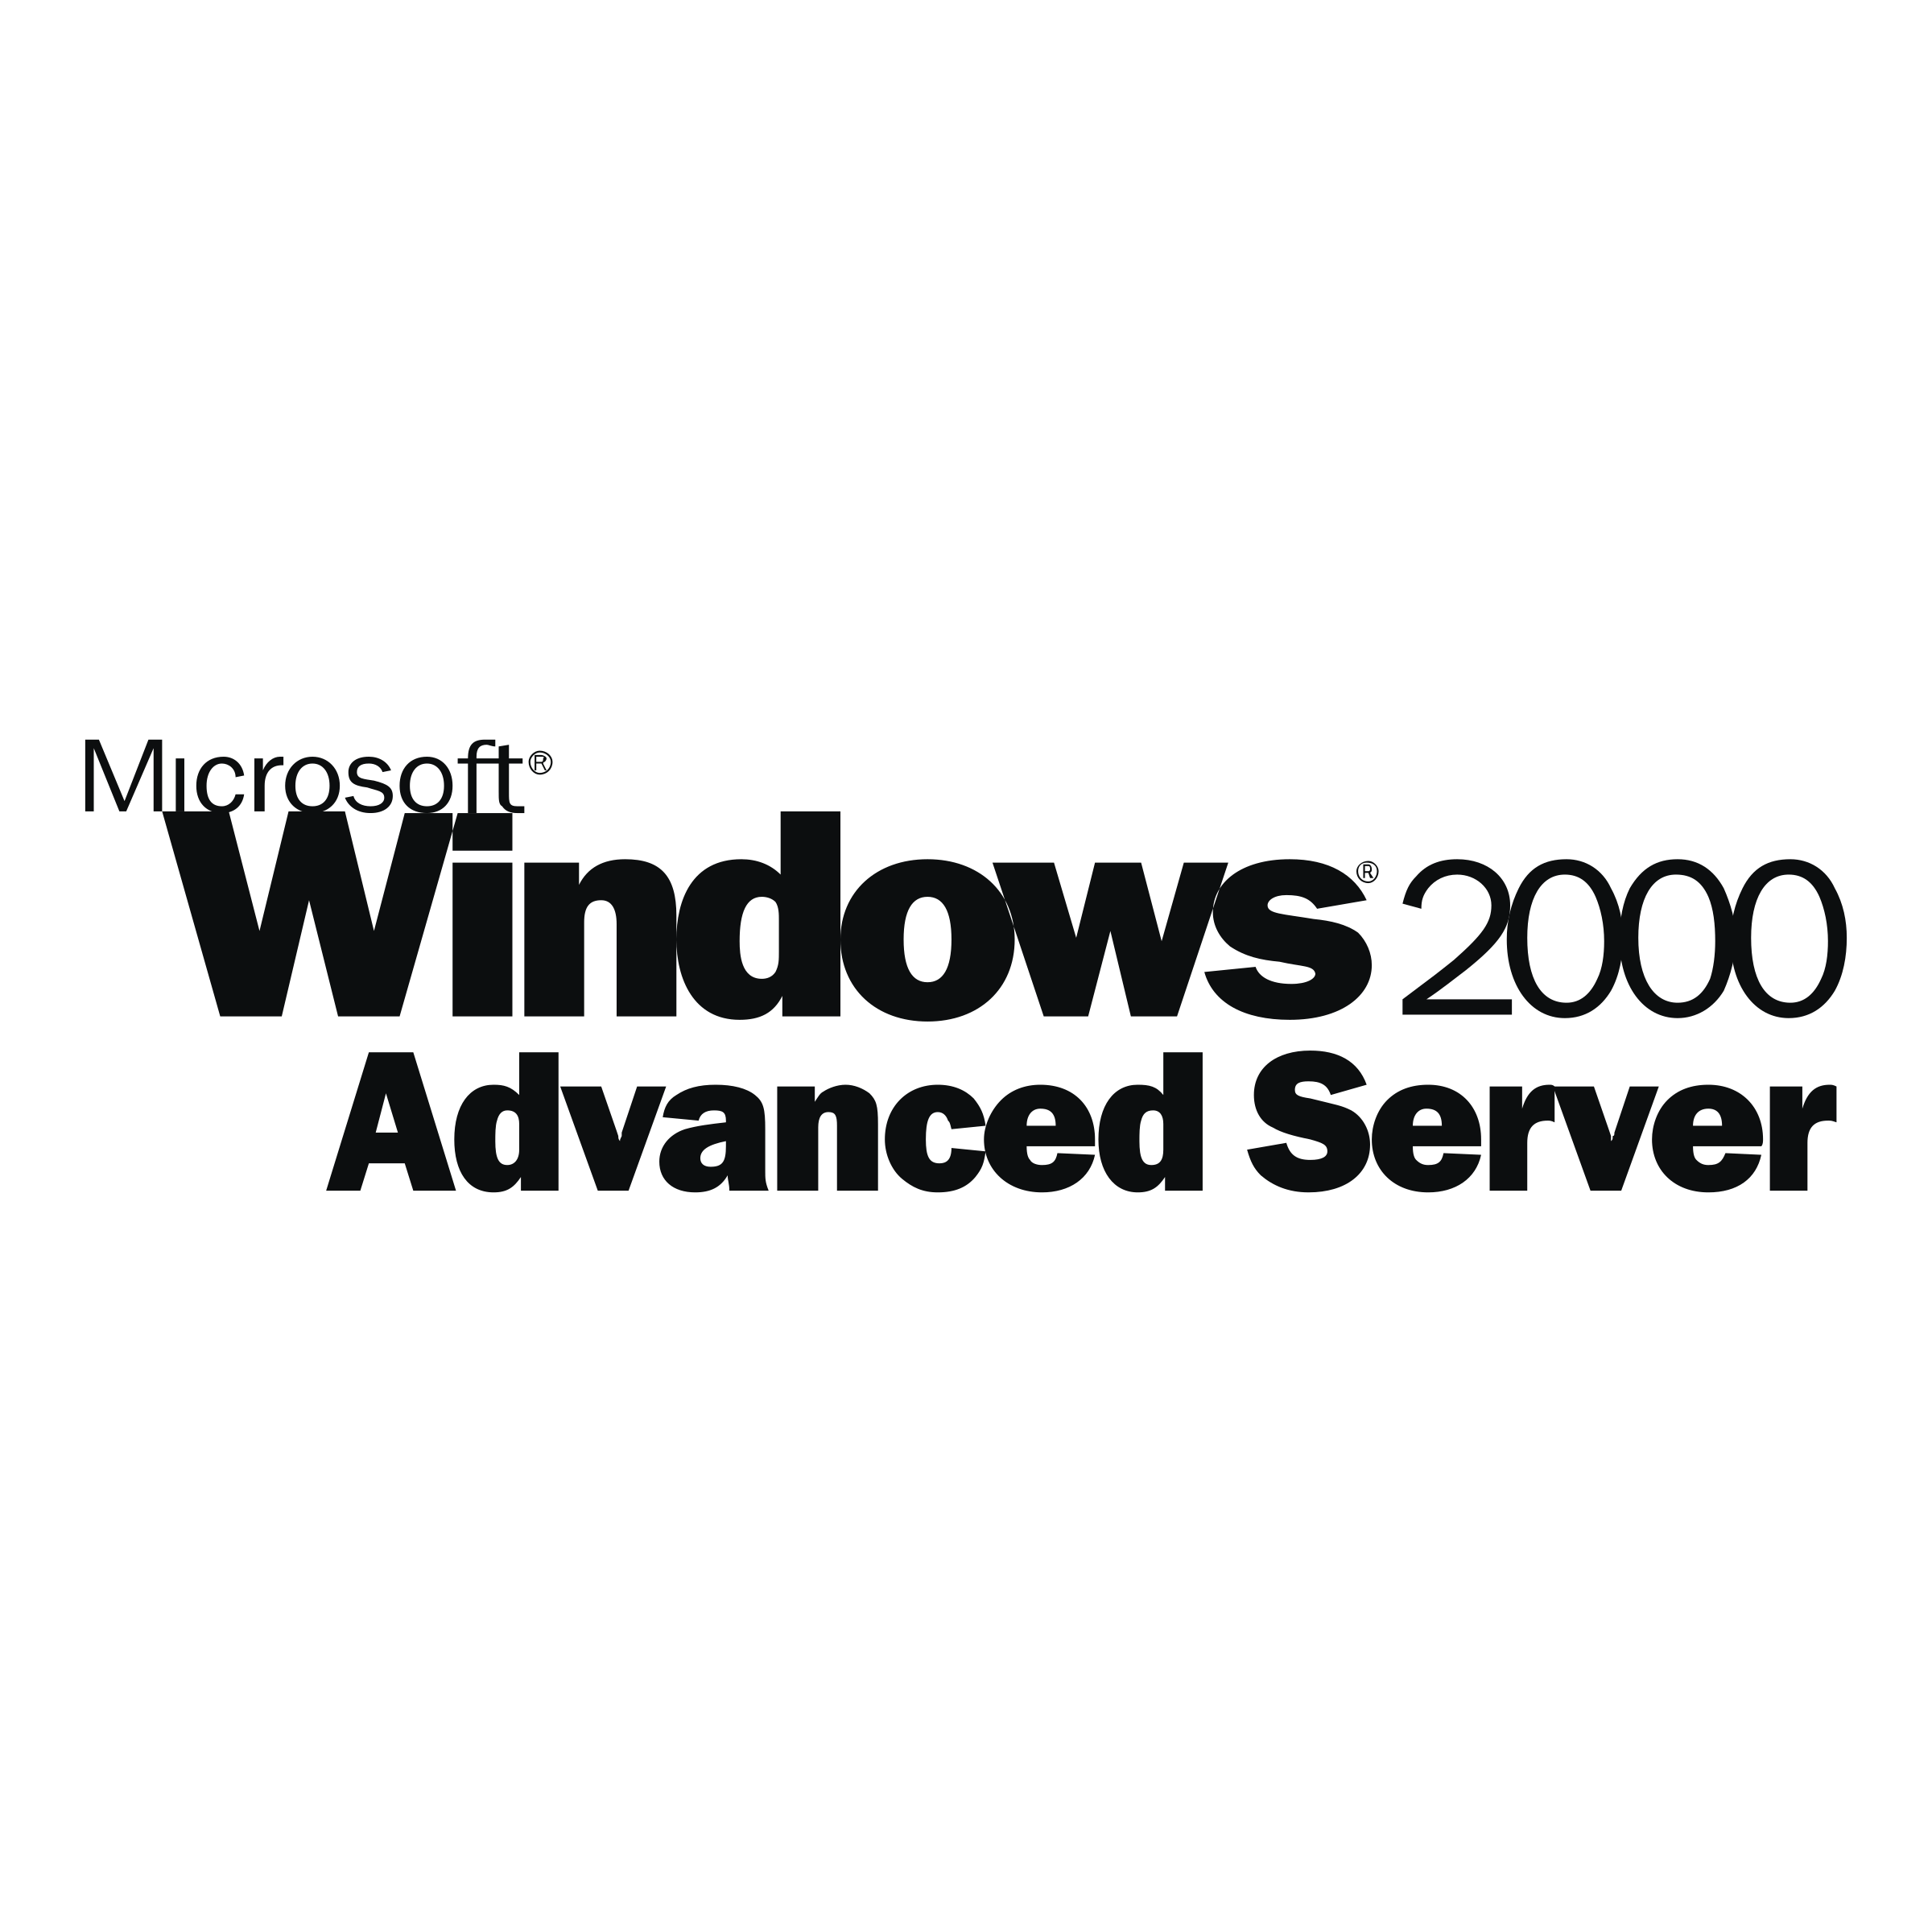 Black Server Logo - Microsoft Windows 2000 Advanced Server Logo PNG Transparent & SVG ...